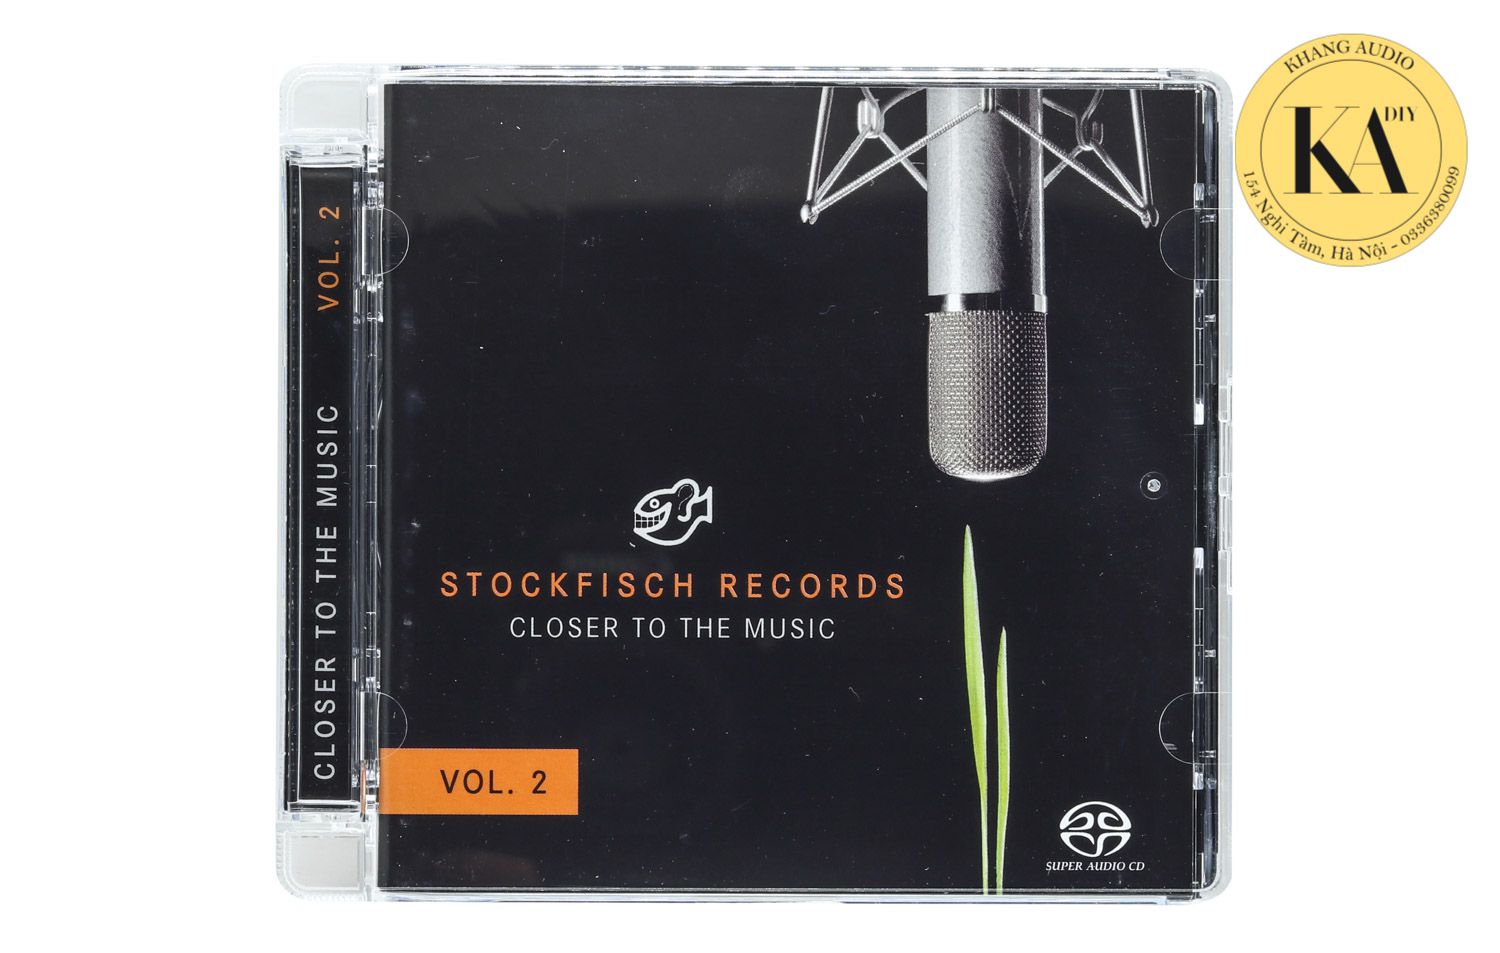 SACD Stockfisch Records Vol.2 Khang Audio 0336380099